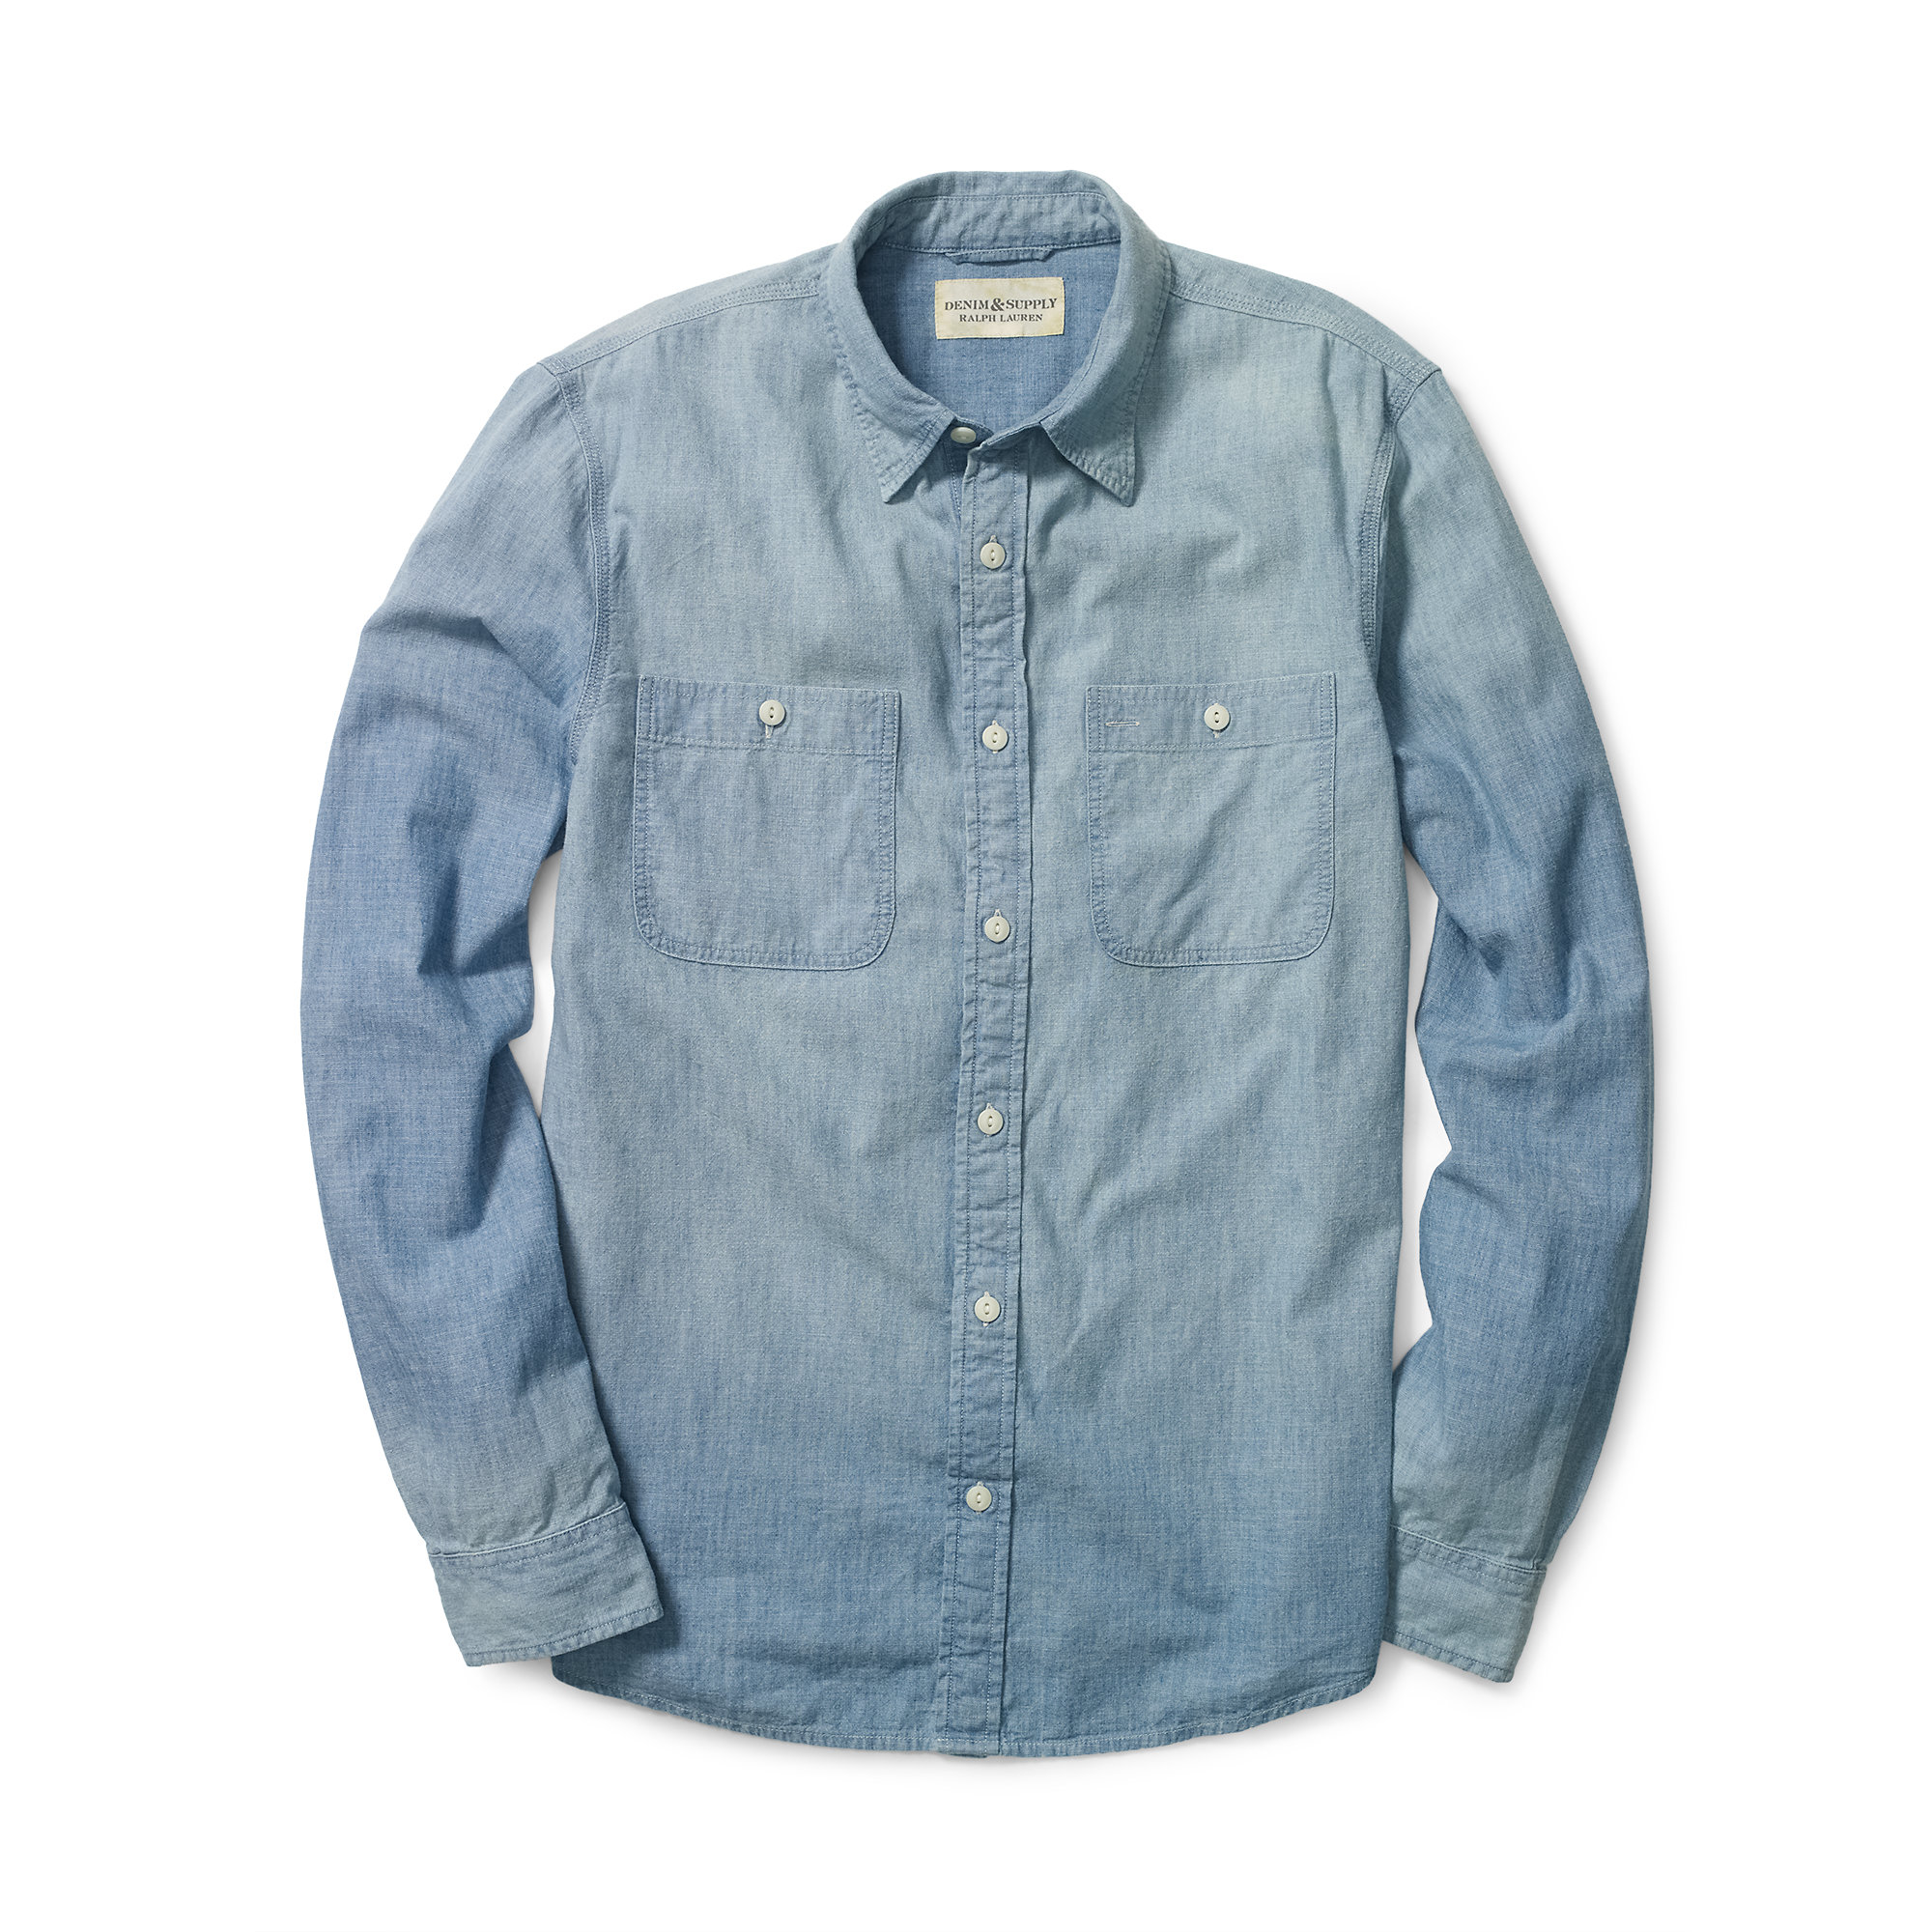 Denim & Supply Ralph Lauren Cotton Chambray Shirt in Faded Bleach Wash  (Blue) for Men - Lyst